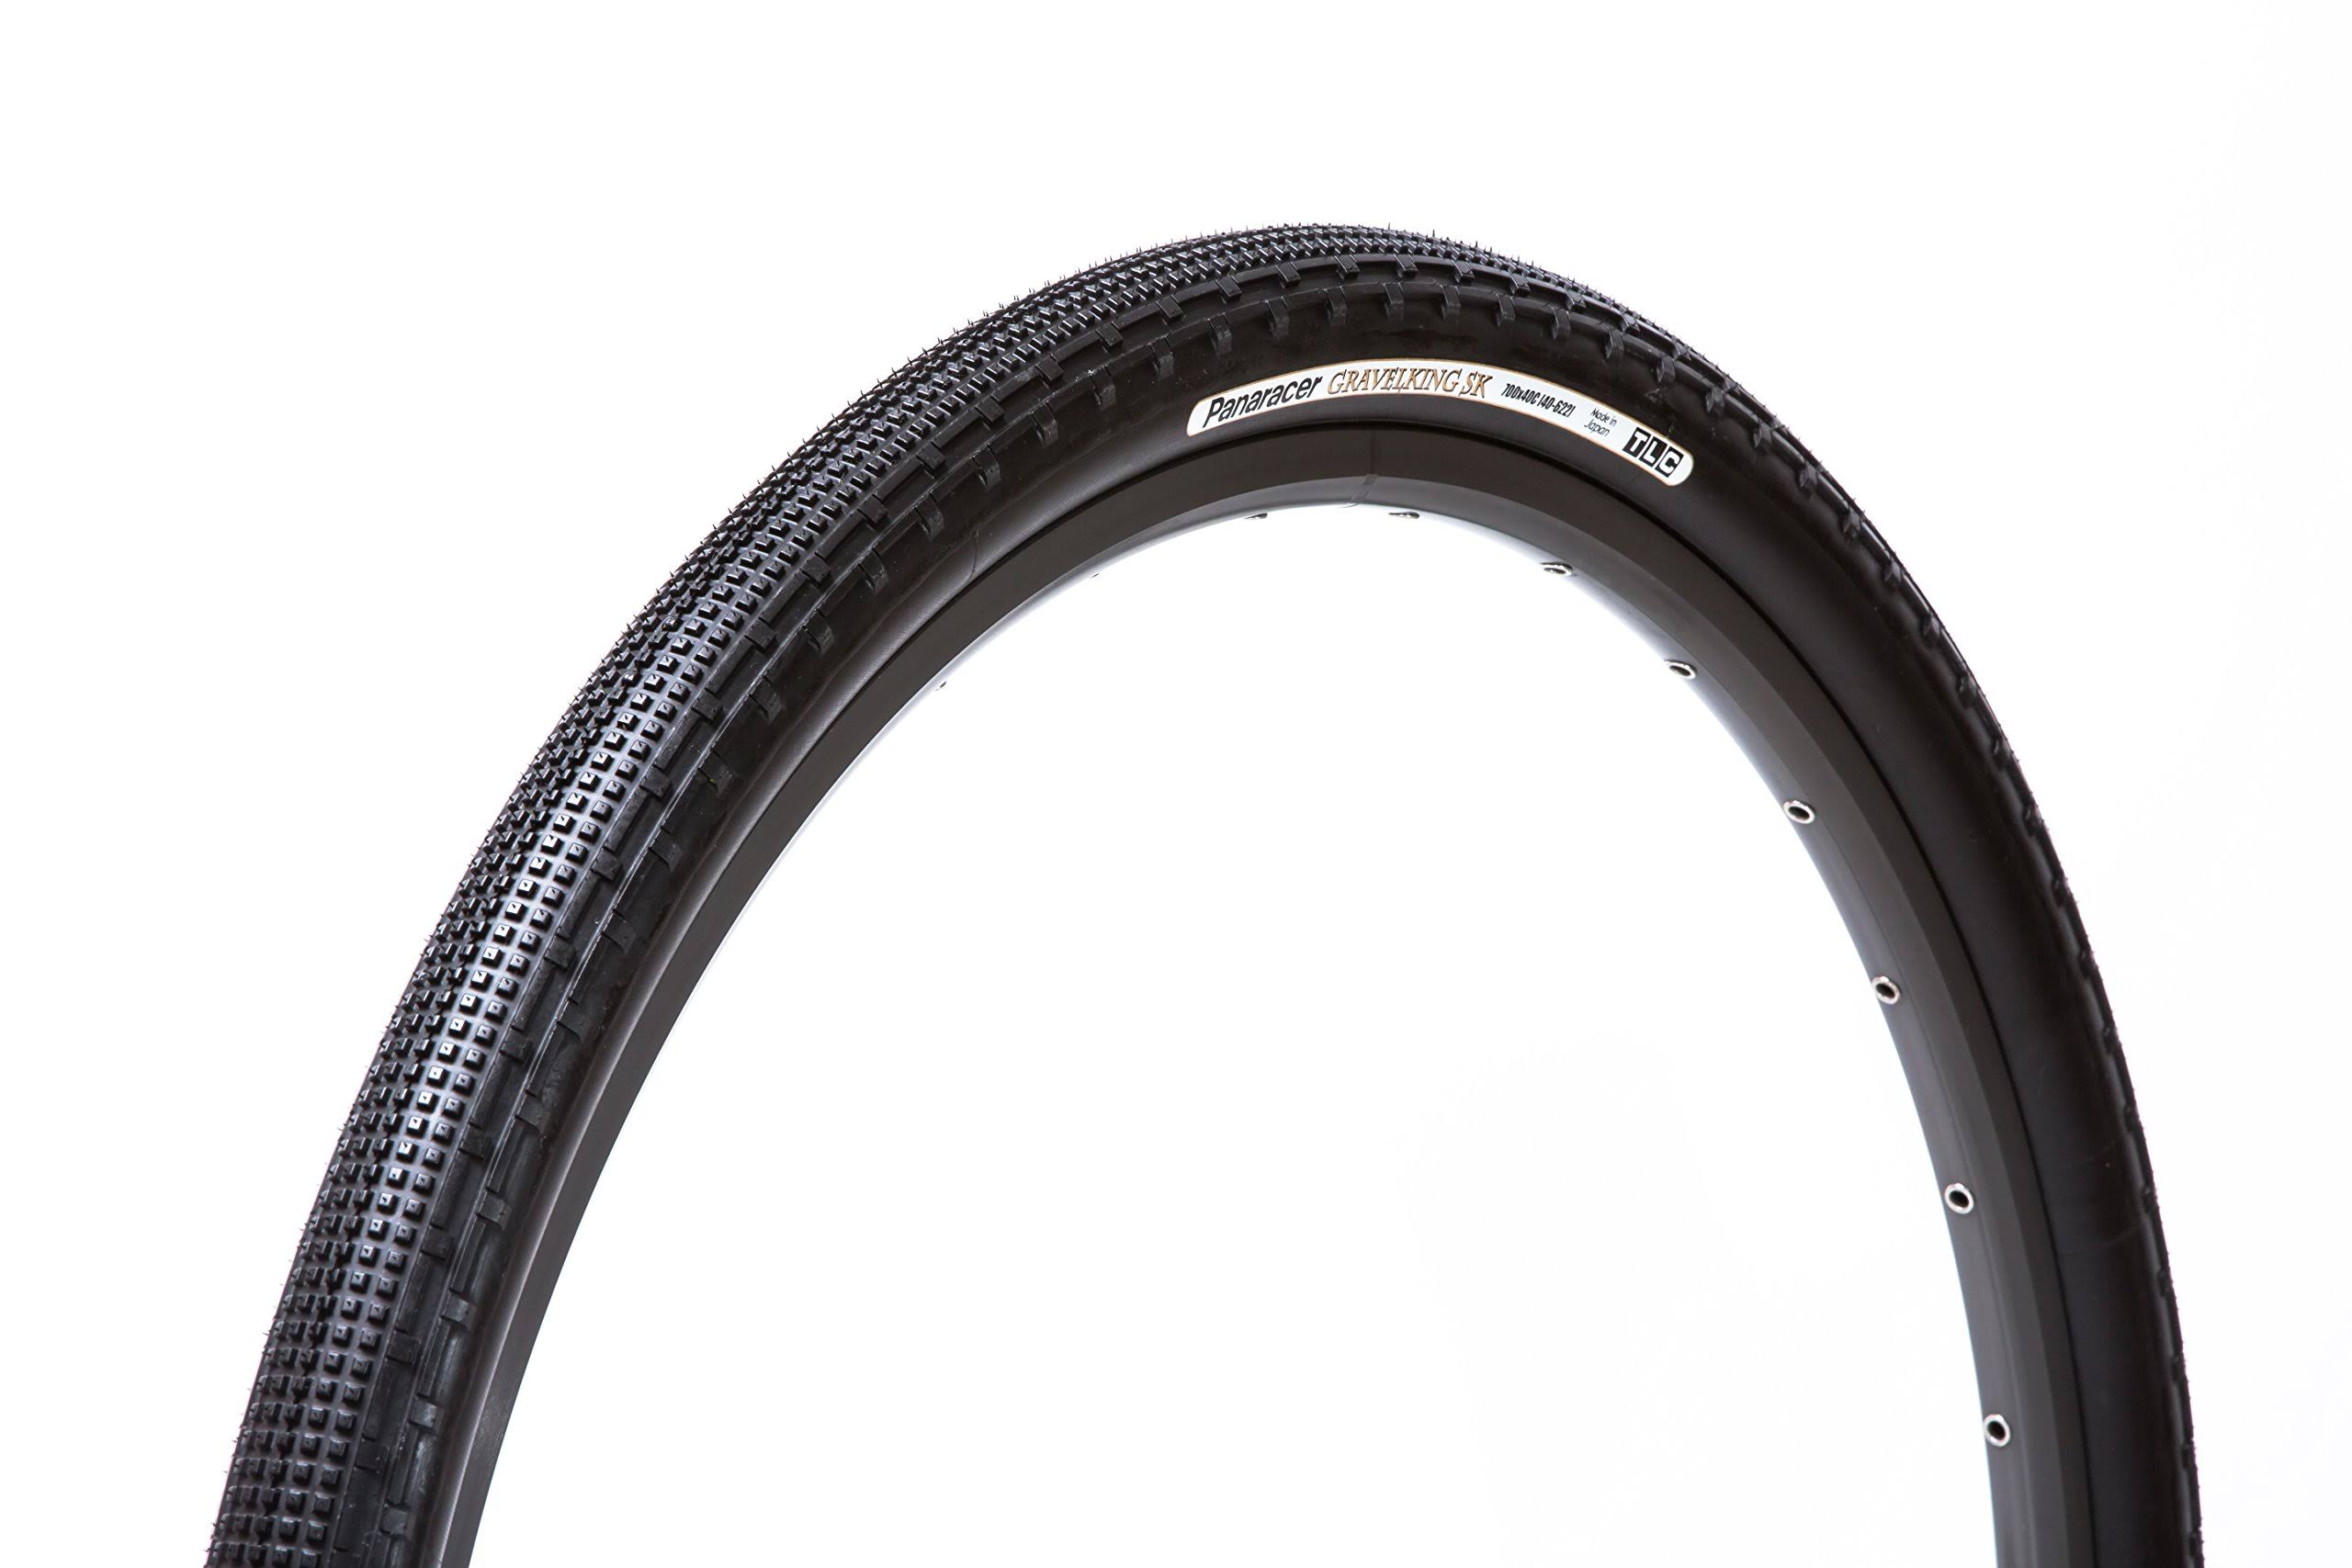 Panaracer Gravelking SK Bicycle Gravel Tire - Black, 700c x 38mm